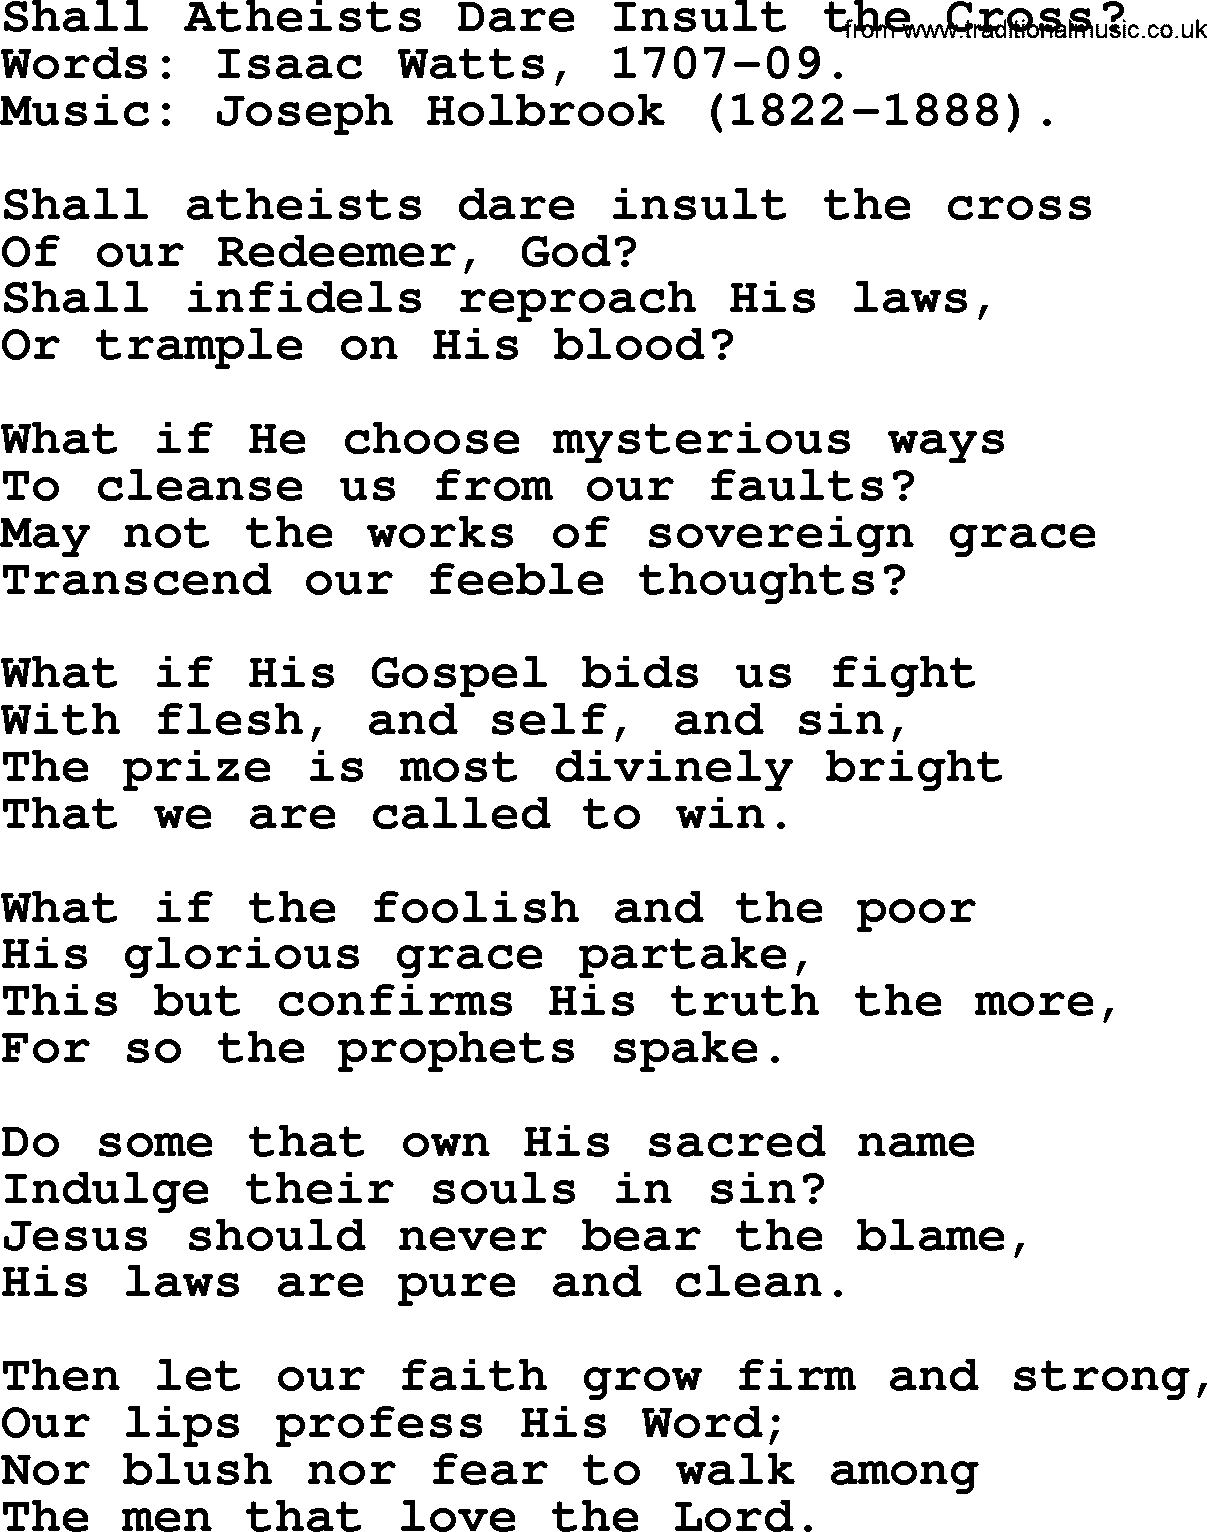 Isaac Watts Christian hymn: Shall Atheists Dare Insult the Cross_- lyricss